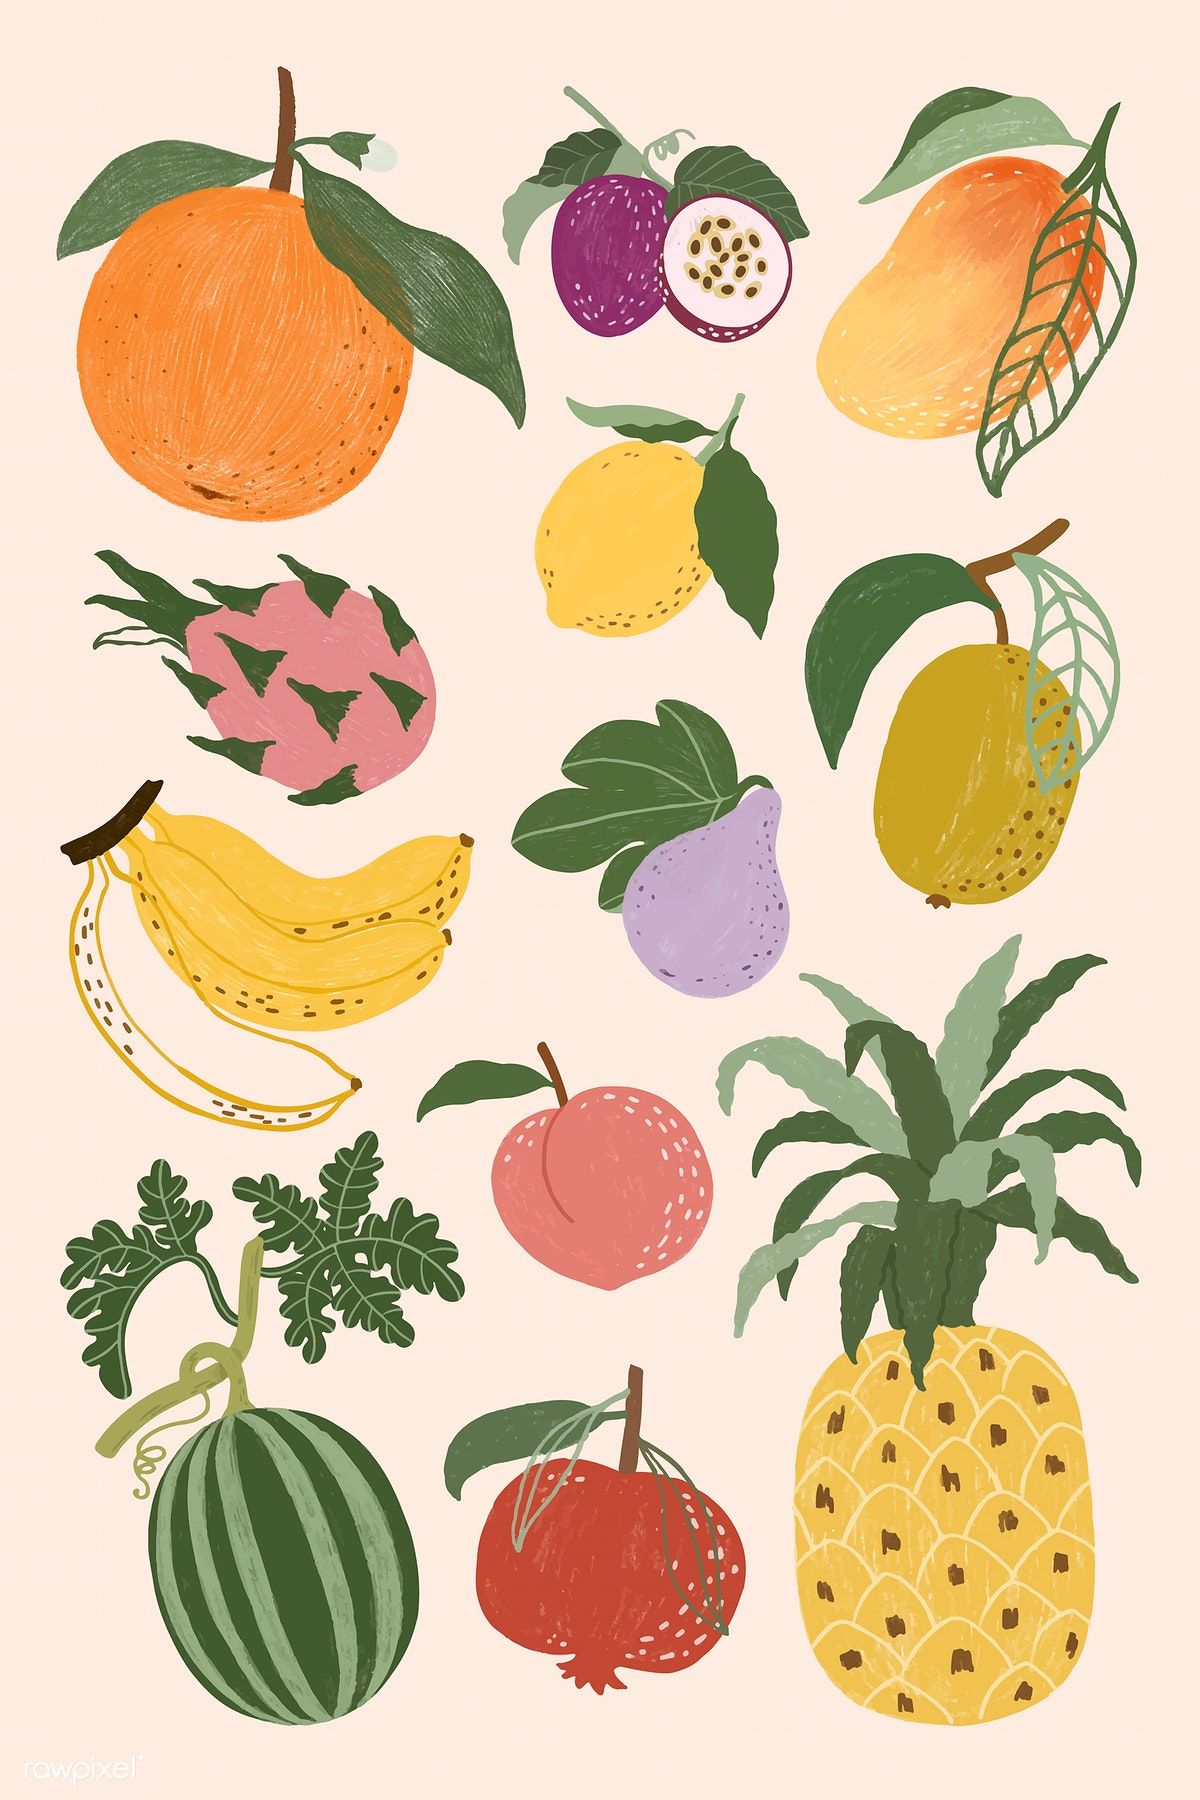 Download premium vector of Hand drawn fruits design resource pack